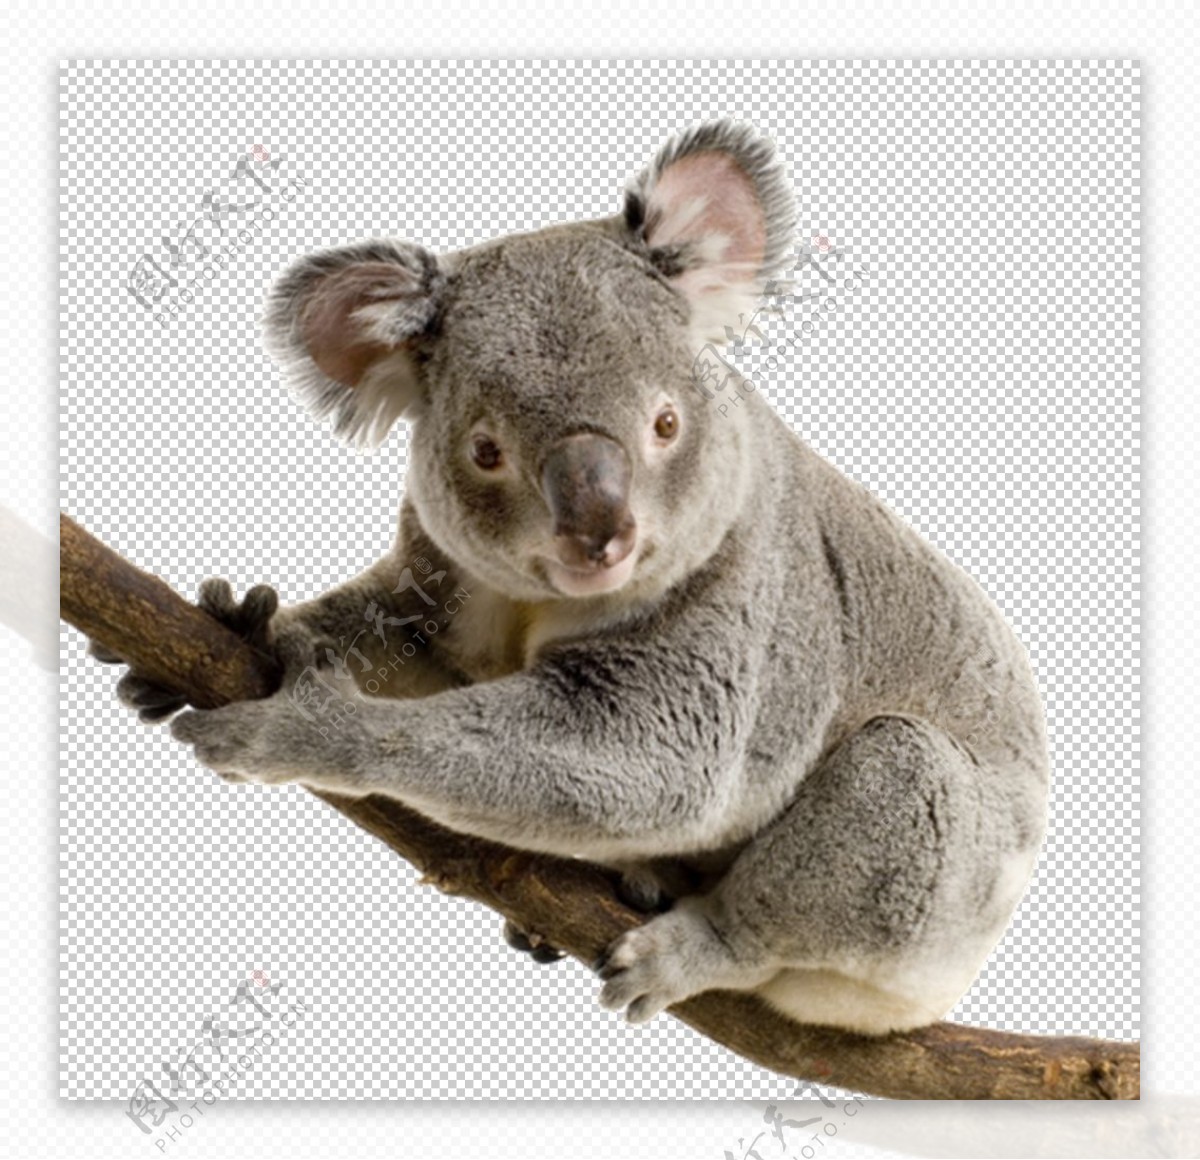 Free Images : wildlife, fauna, australia, vertebrate, marsupial, koala ...